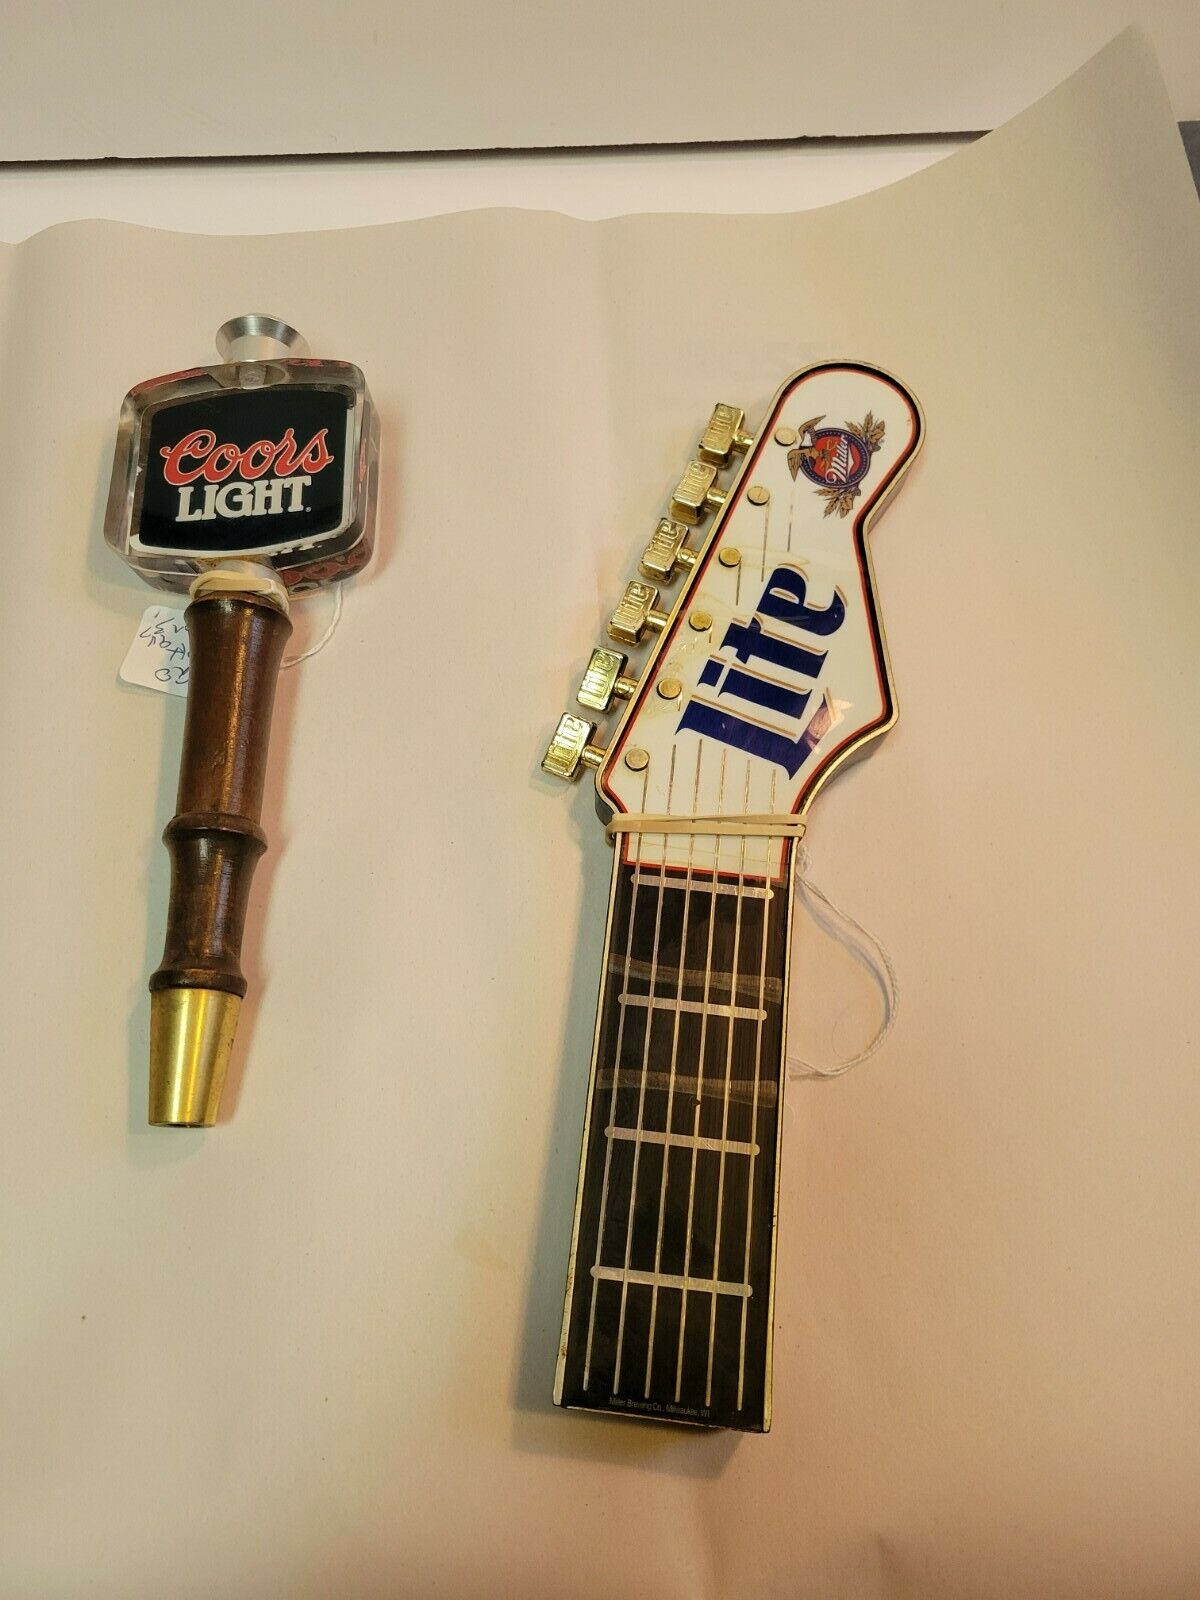  1 Coors Light and 1 Miller Lite Guitar beer tap handles